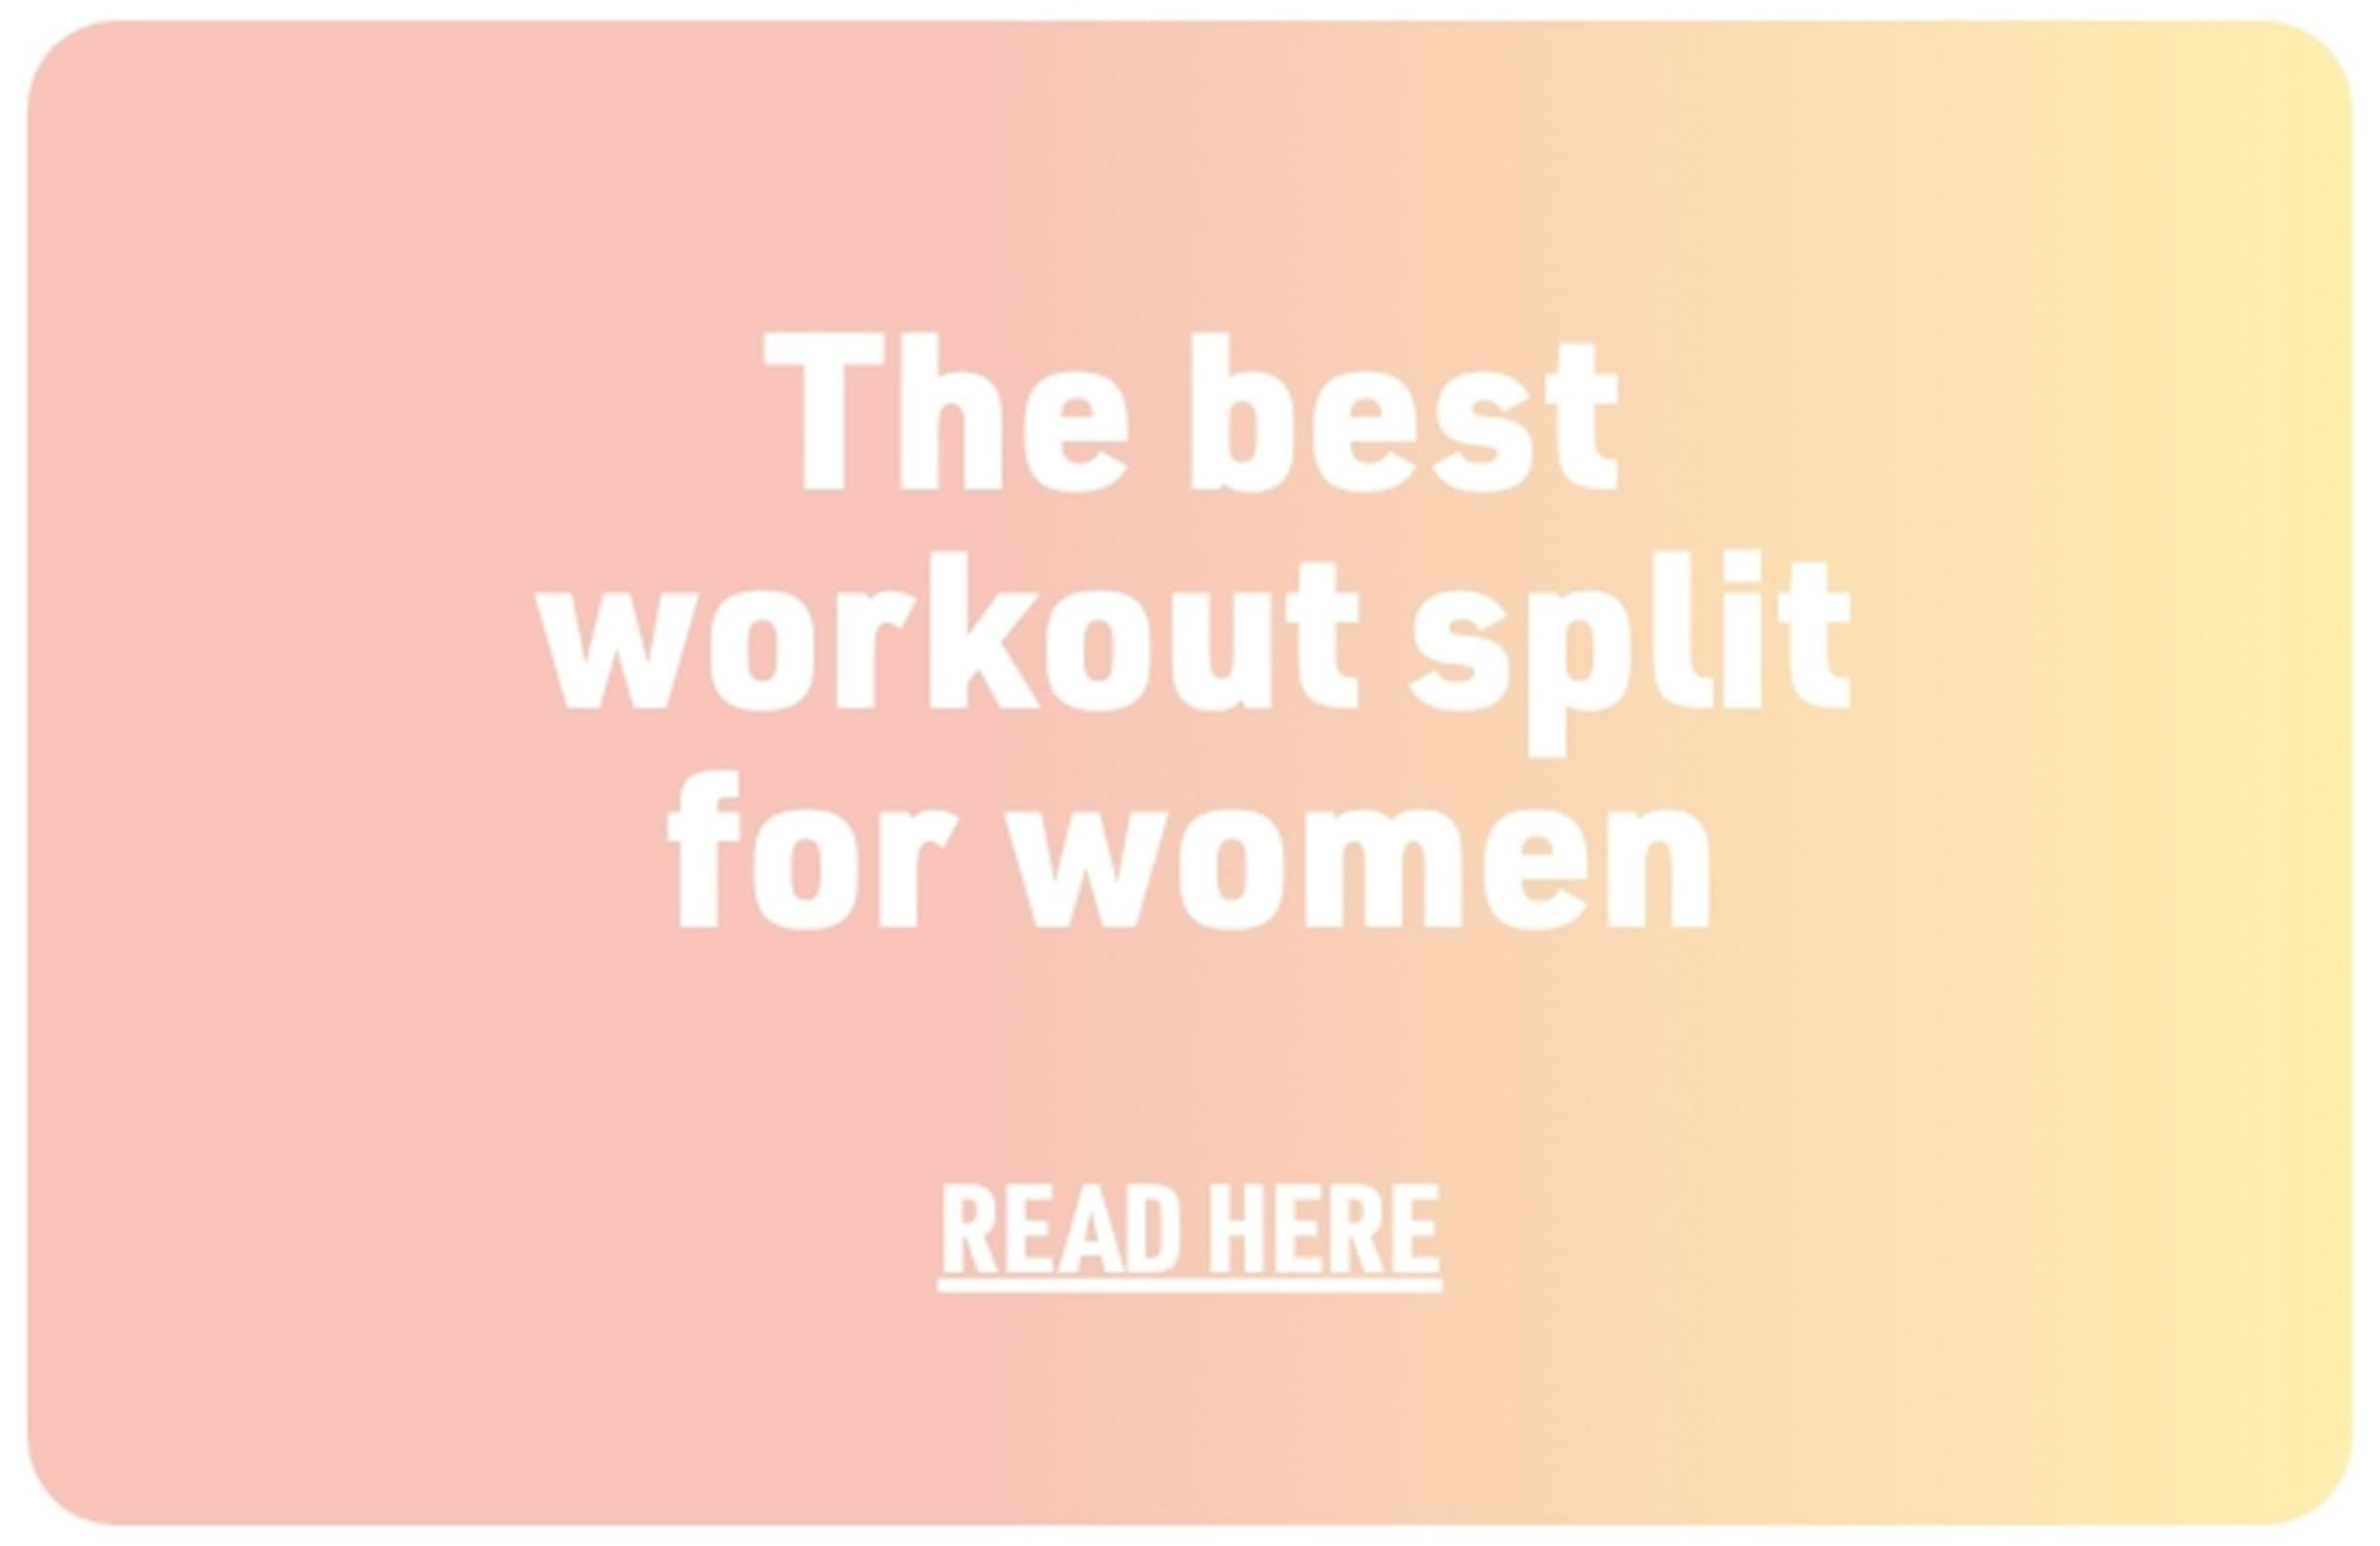 The best workout split for women